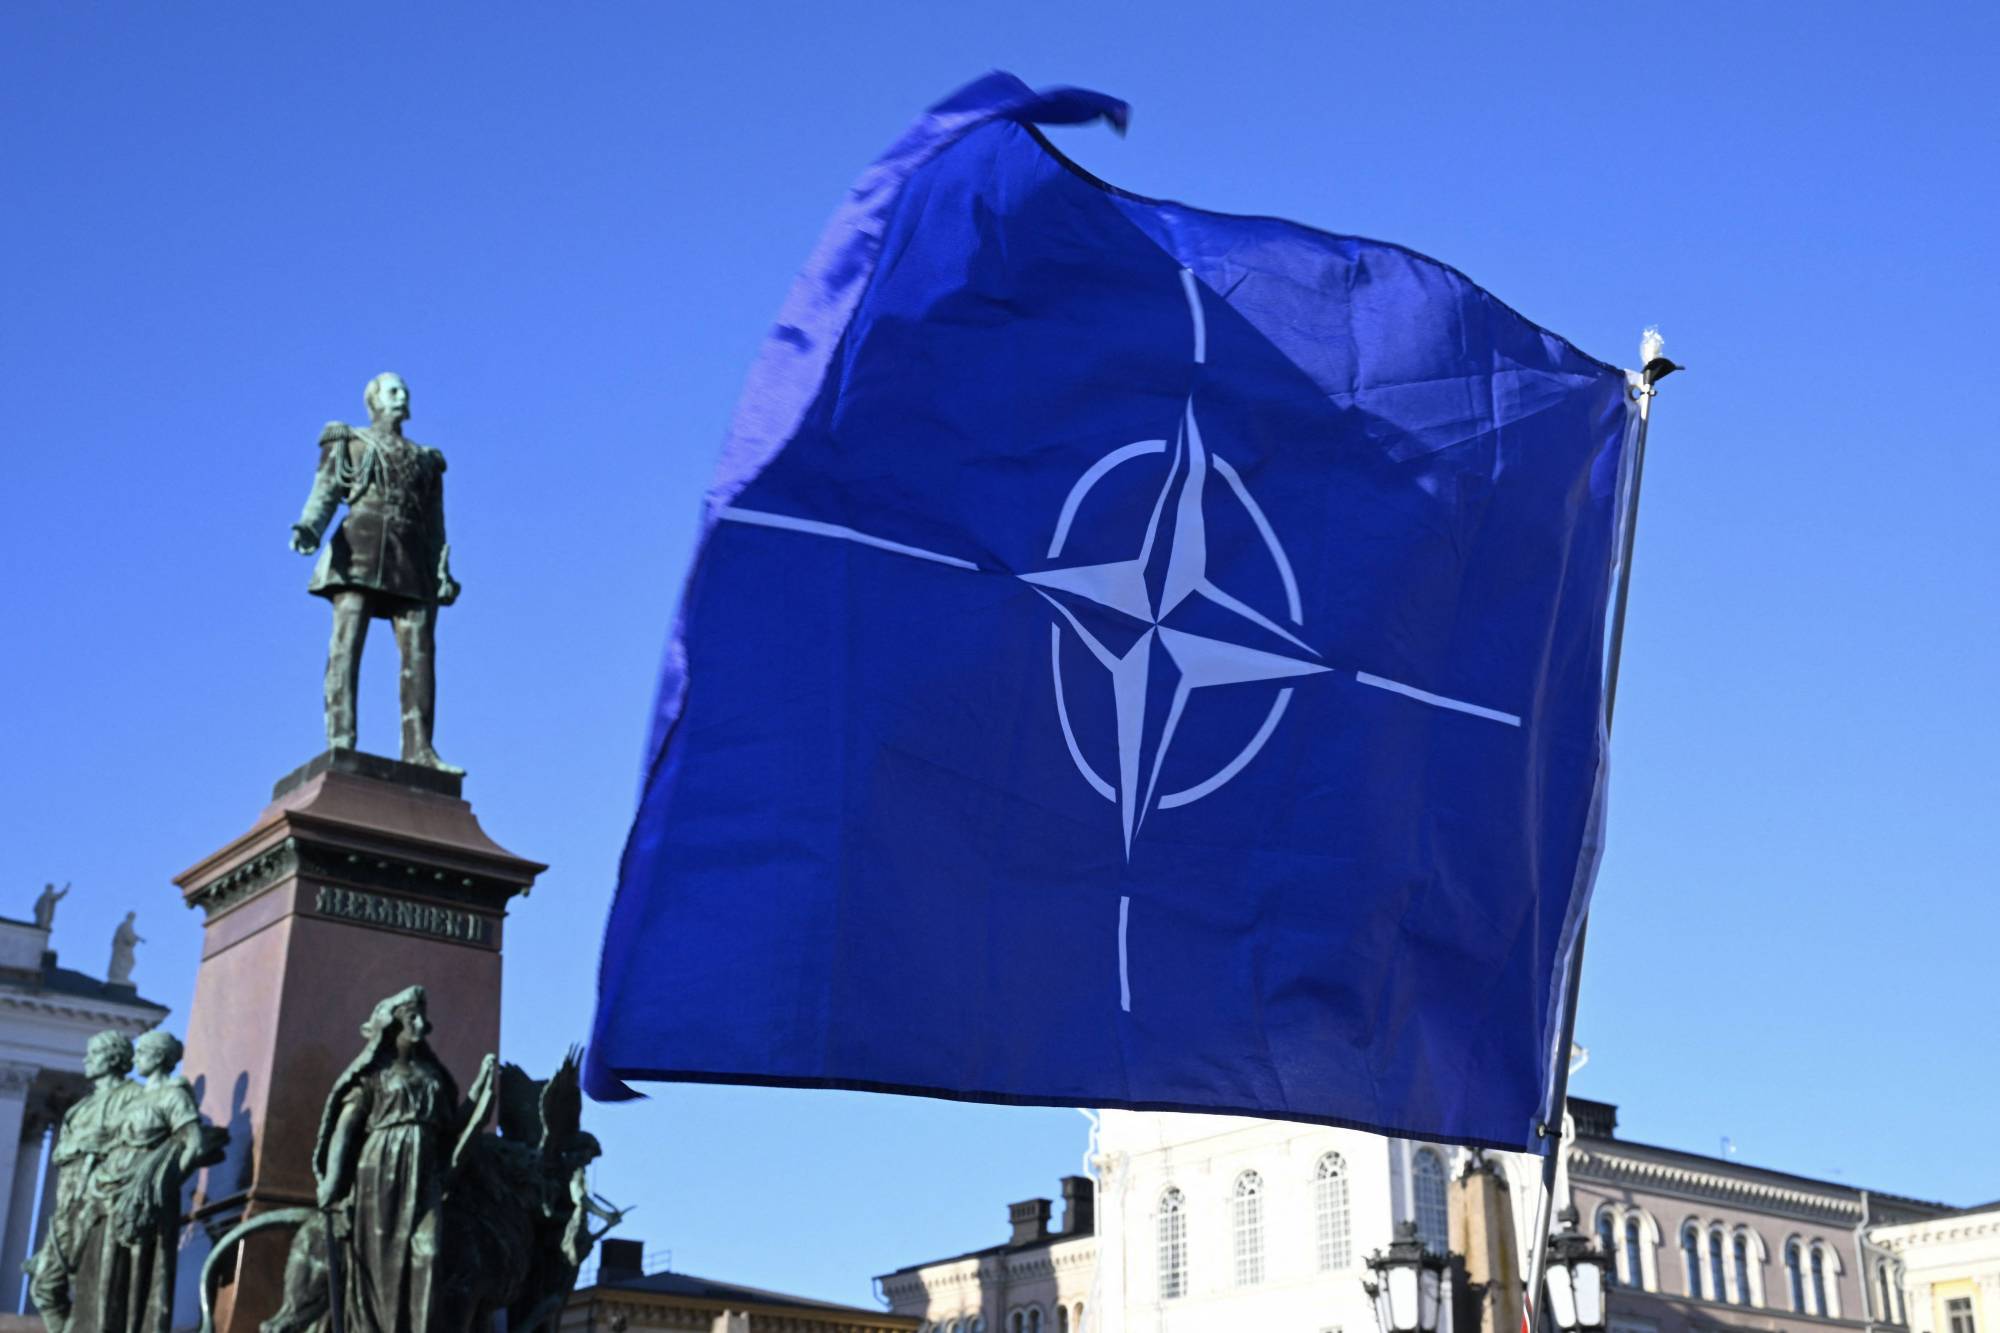 Russian “countermeasures” to NATO are coming